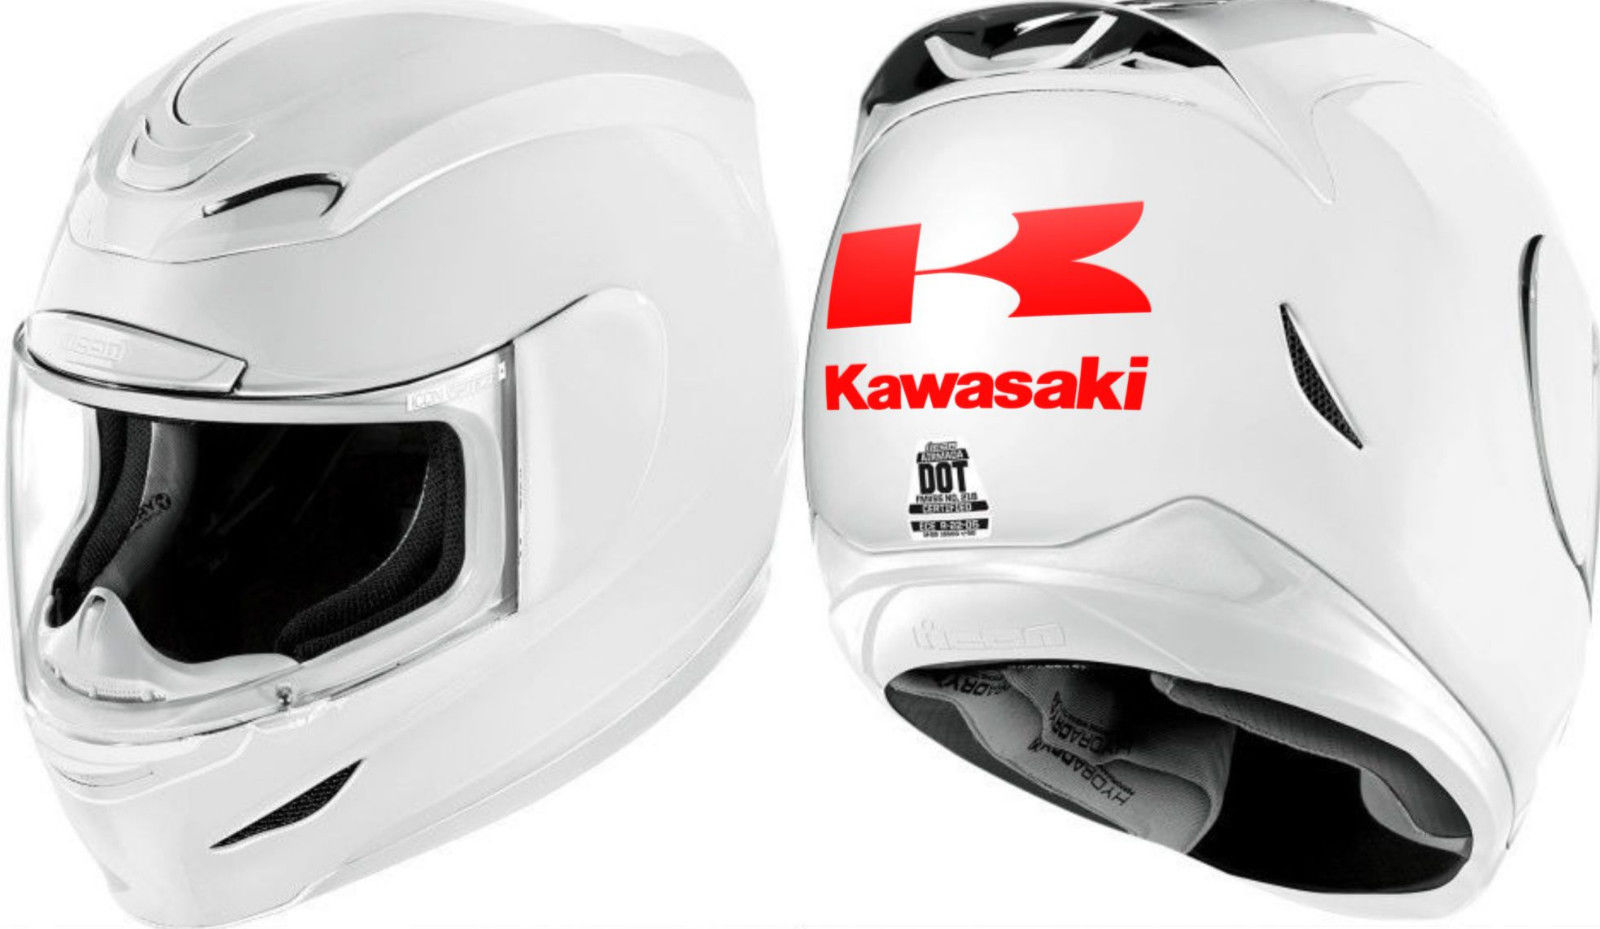 3 Kawasaki moto sticker for helmet fairing tank decal motorcycle arai